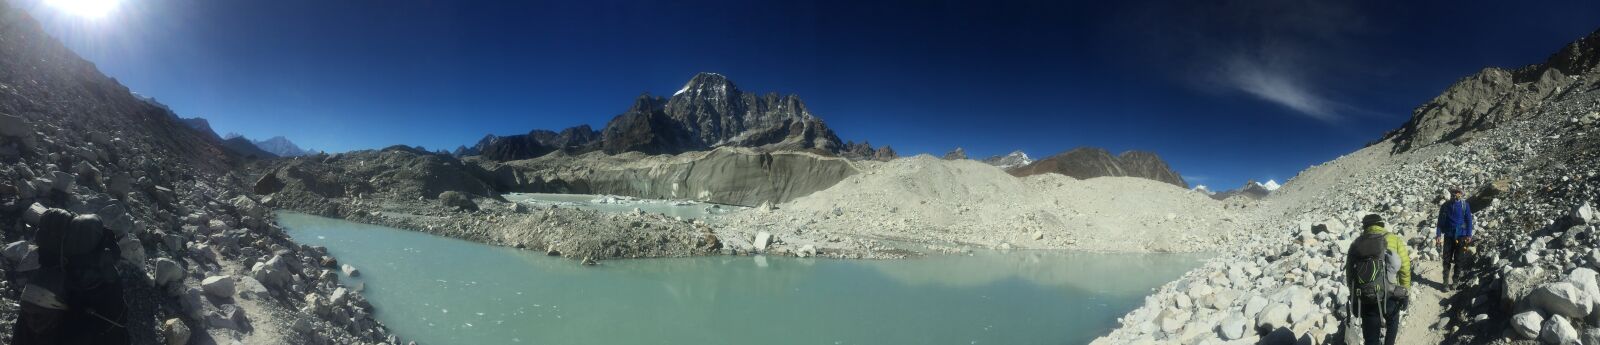 Apple iPhone 6 Plus sample photo. Nepal, trekking, himalaya photography